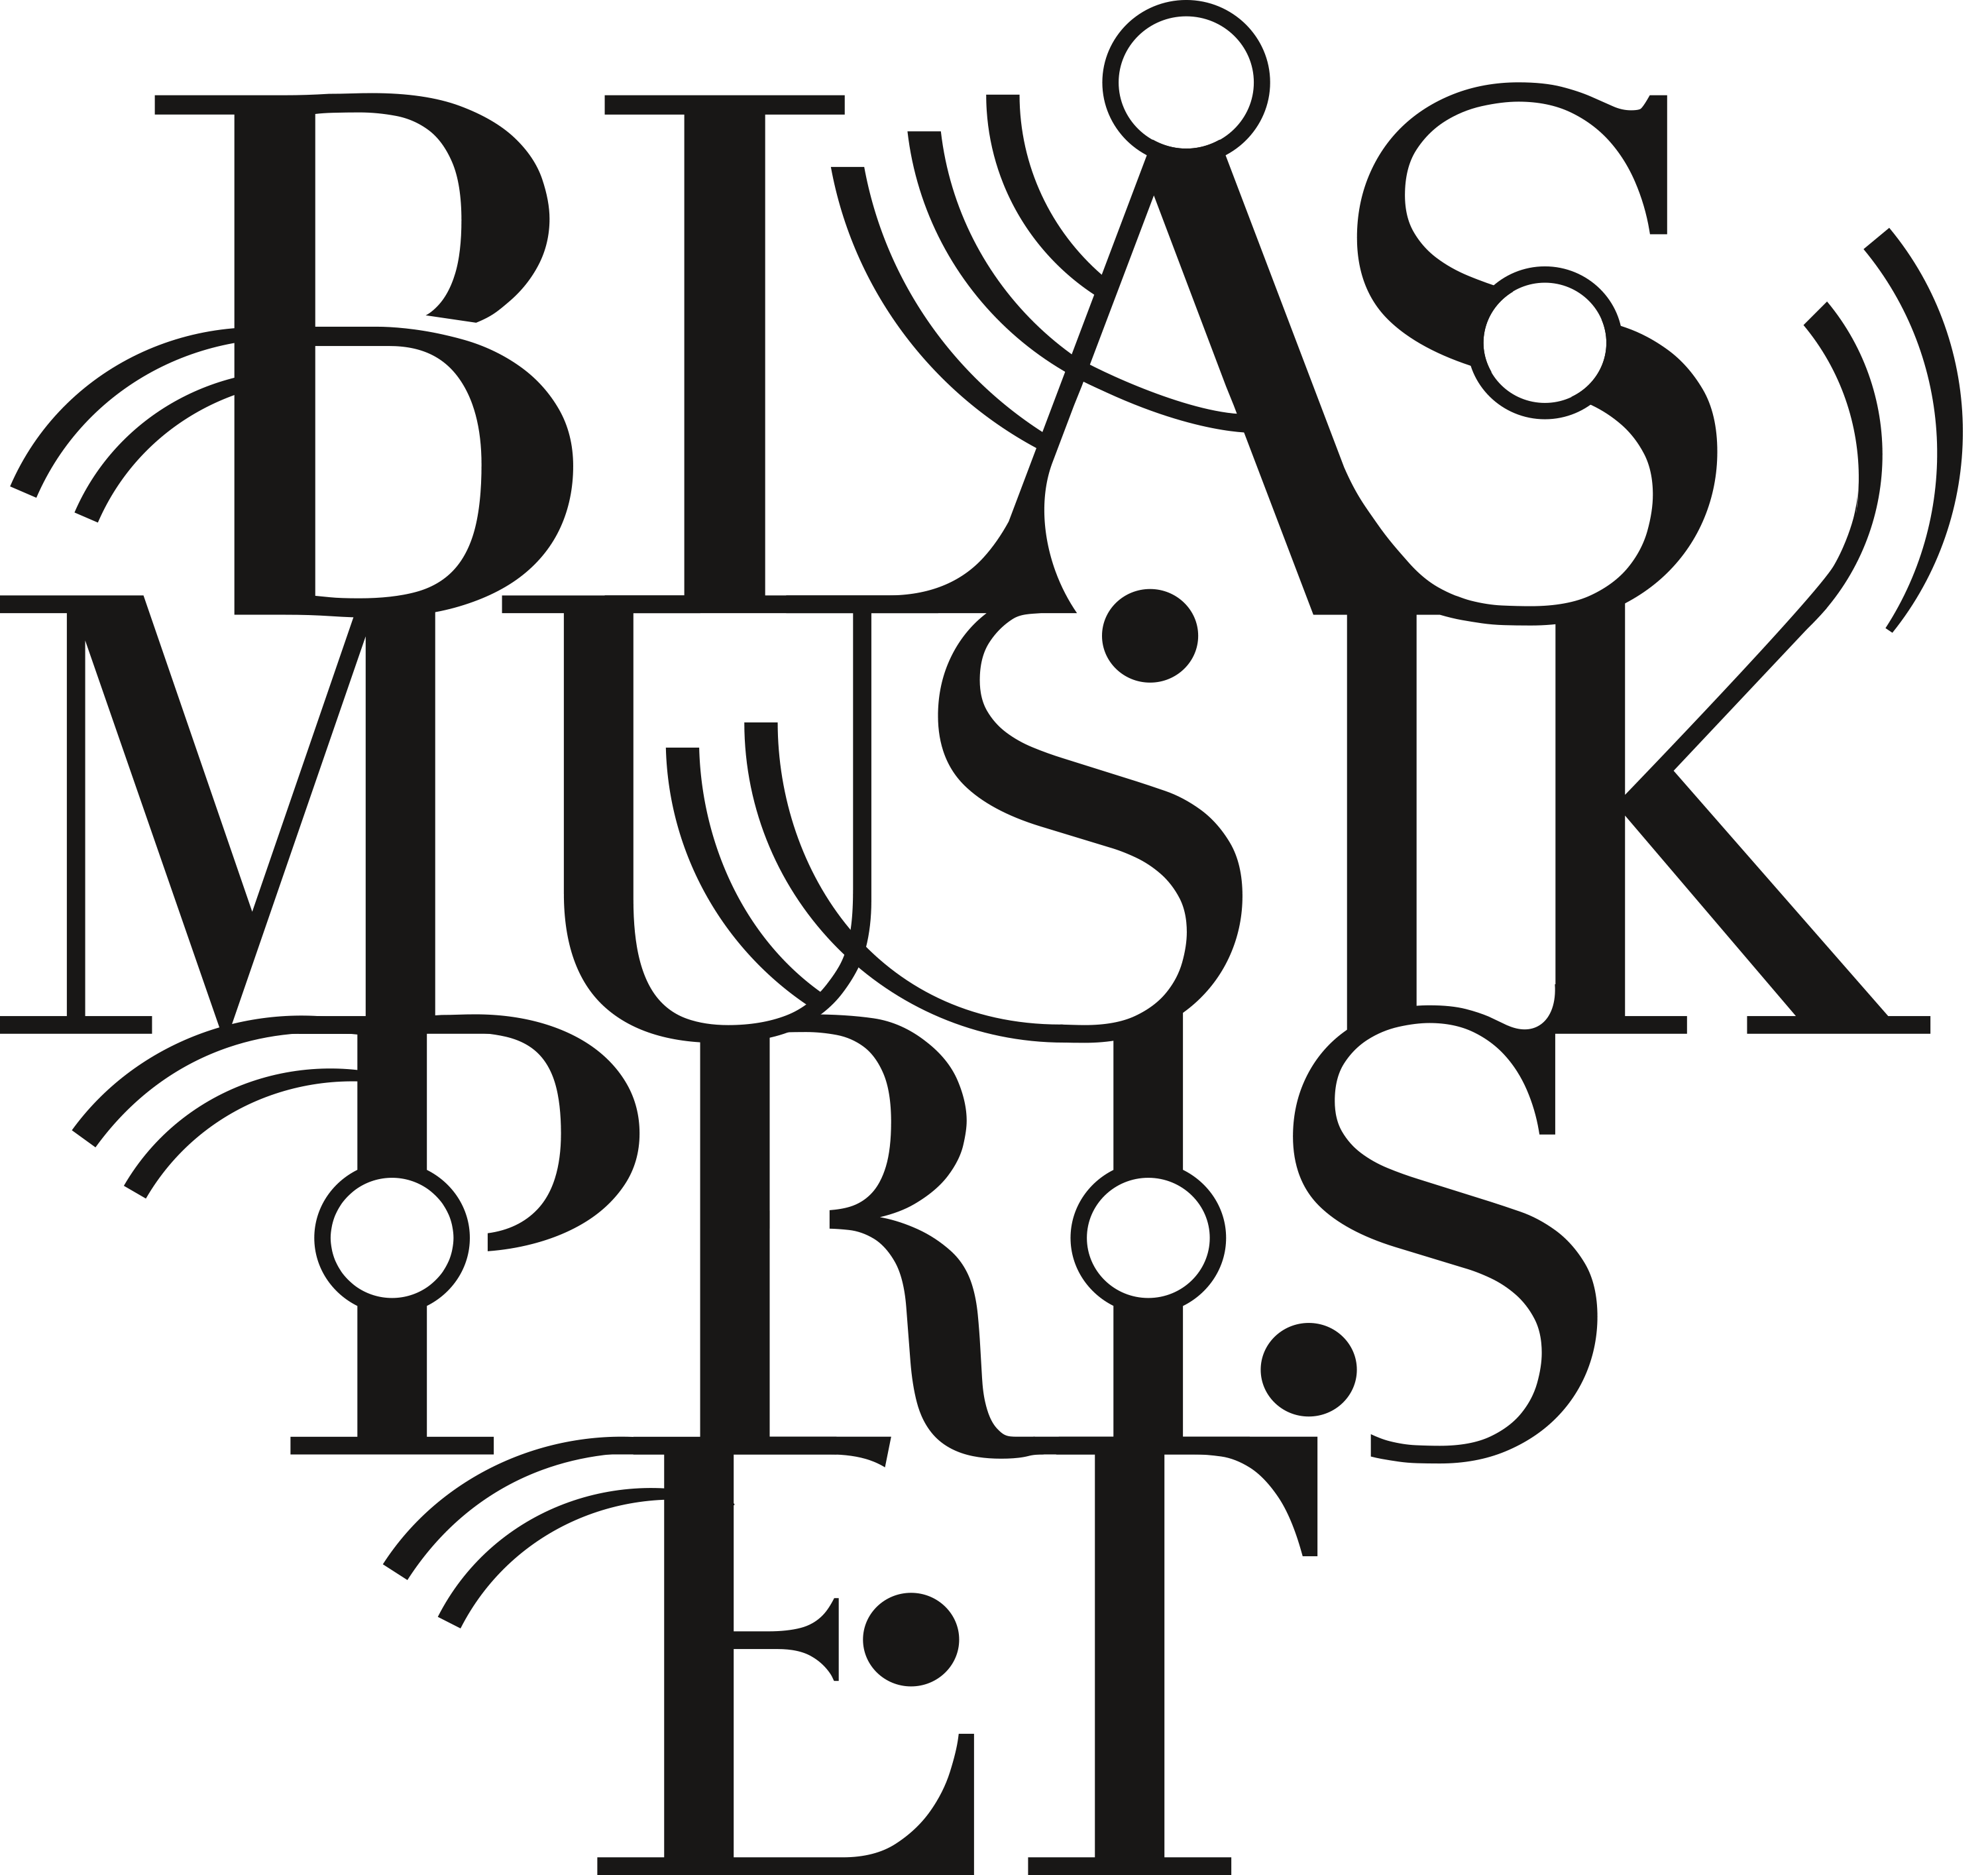 Blåsmusikpriset logo